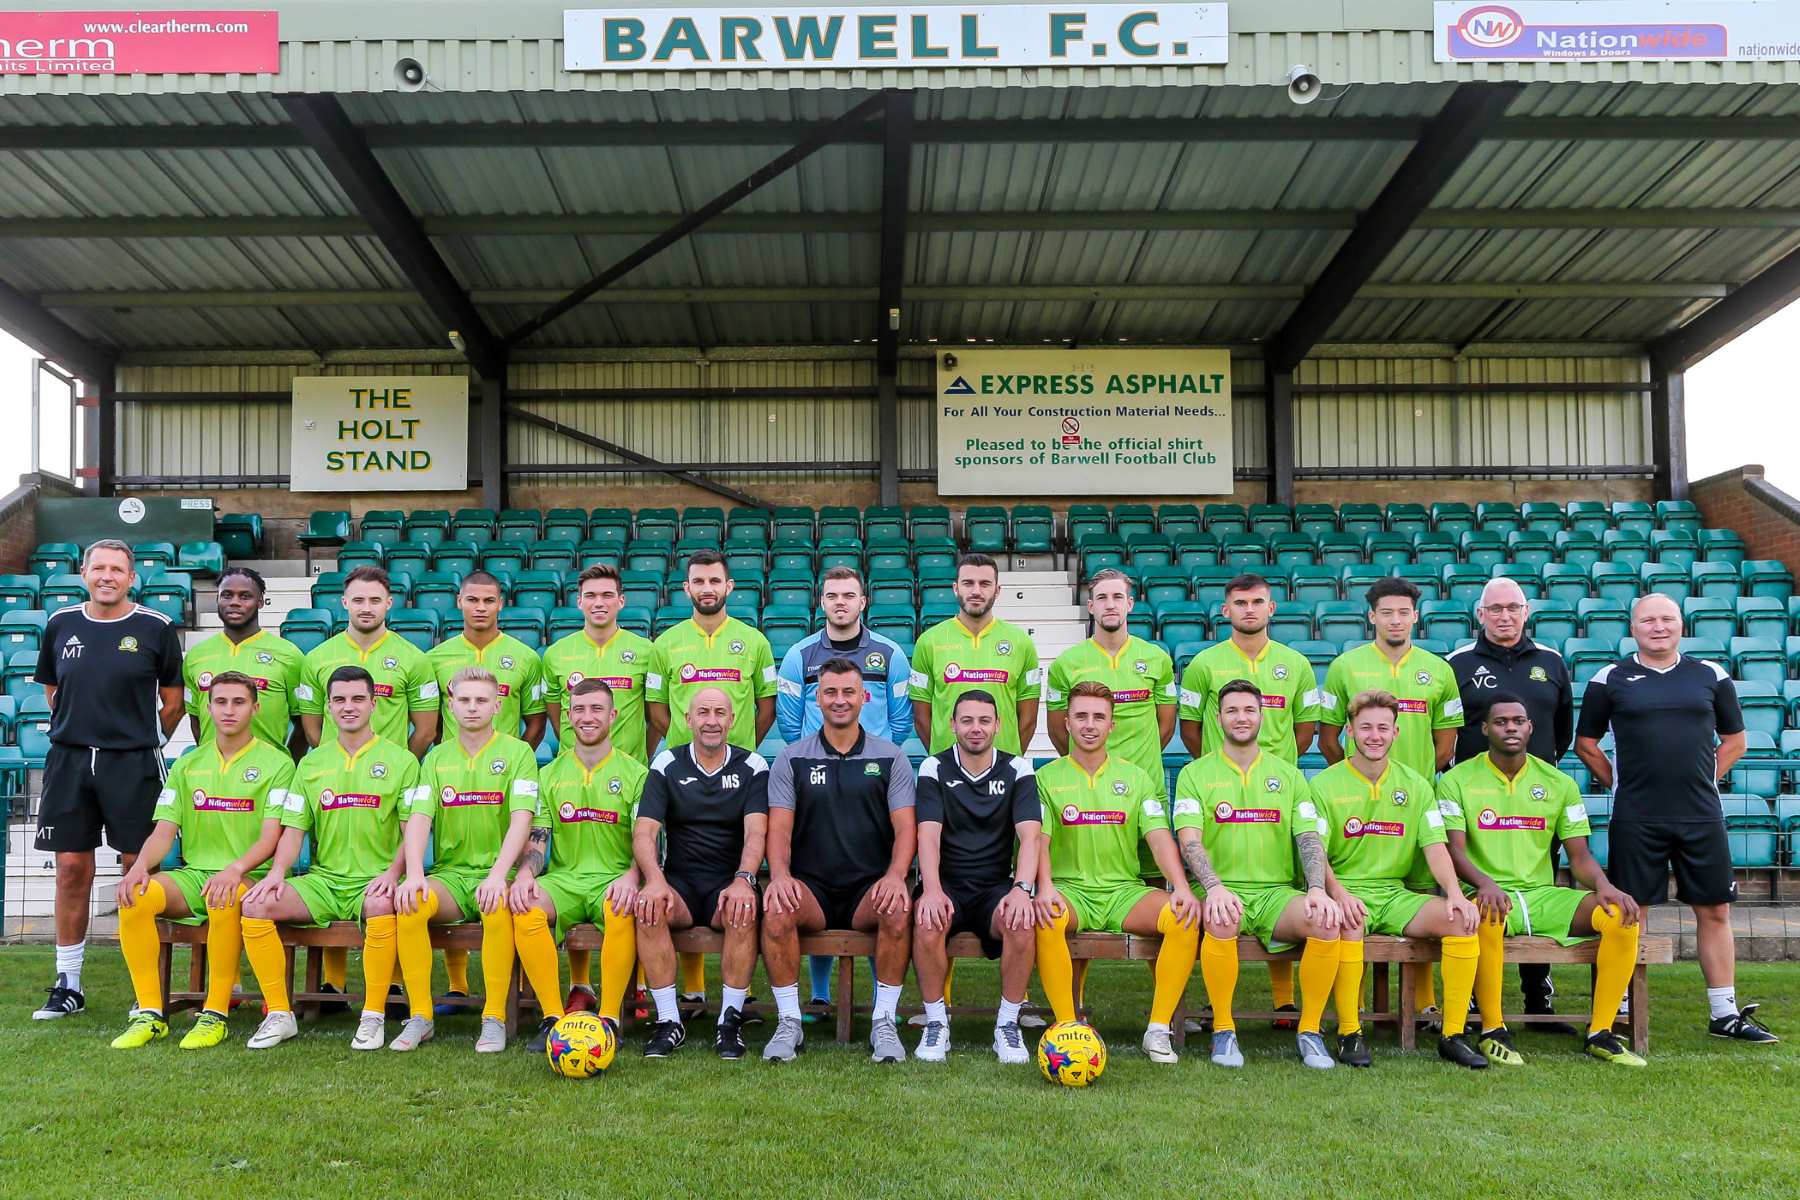 barwell-fc-11-football-club-facts